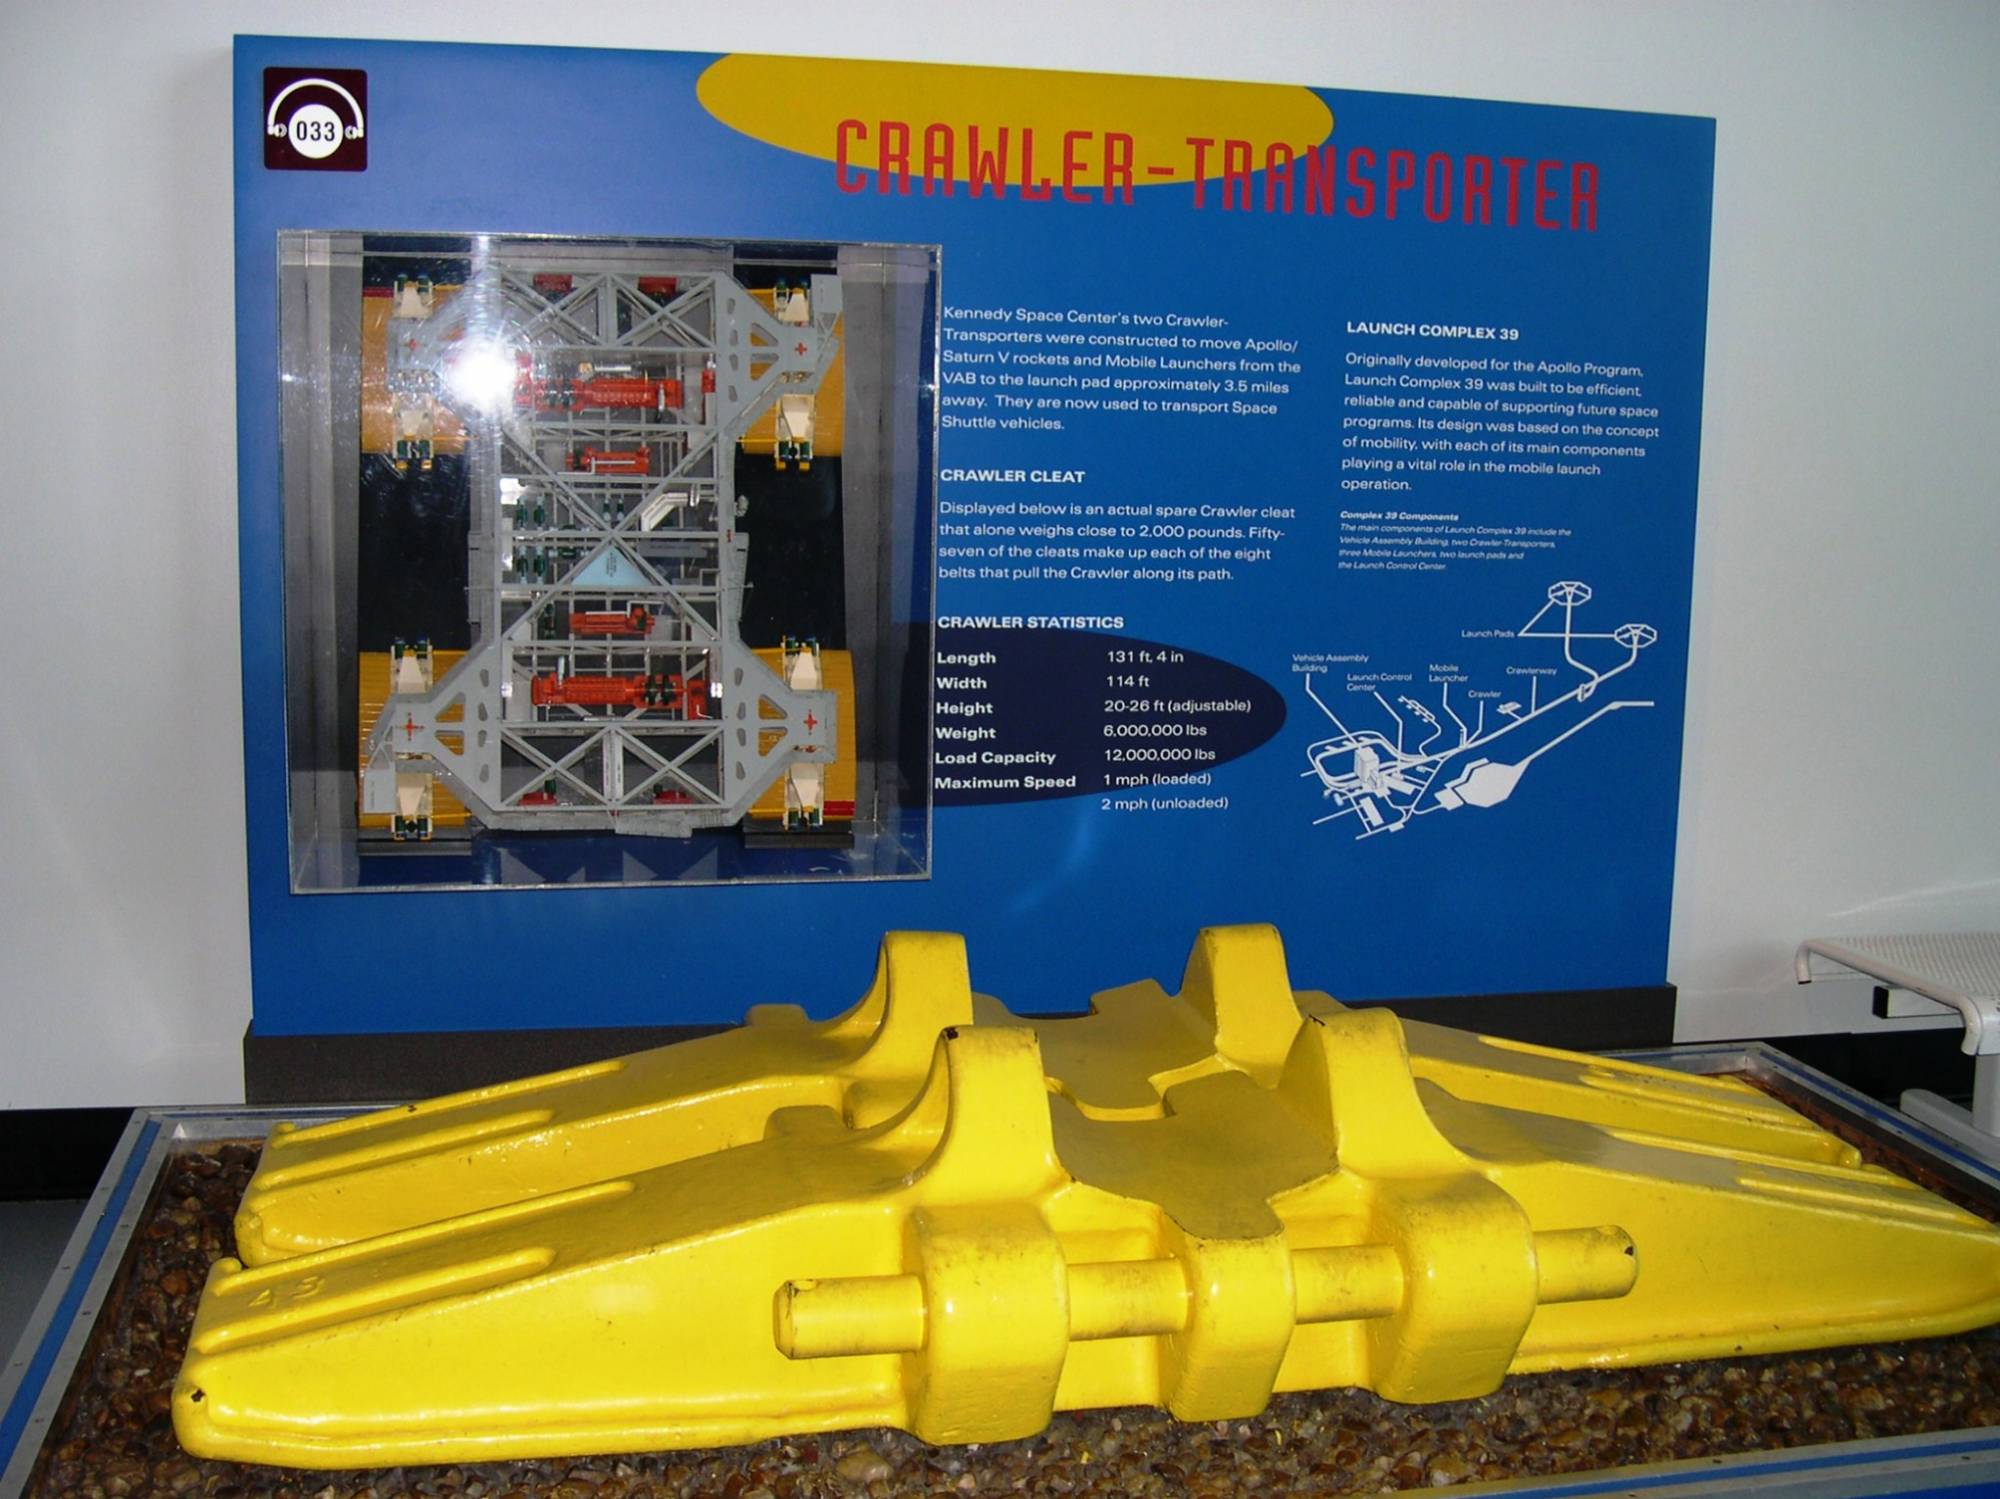 KSC - Crawler - Transporter at Apollo Saturn V Center